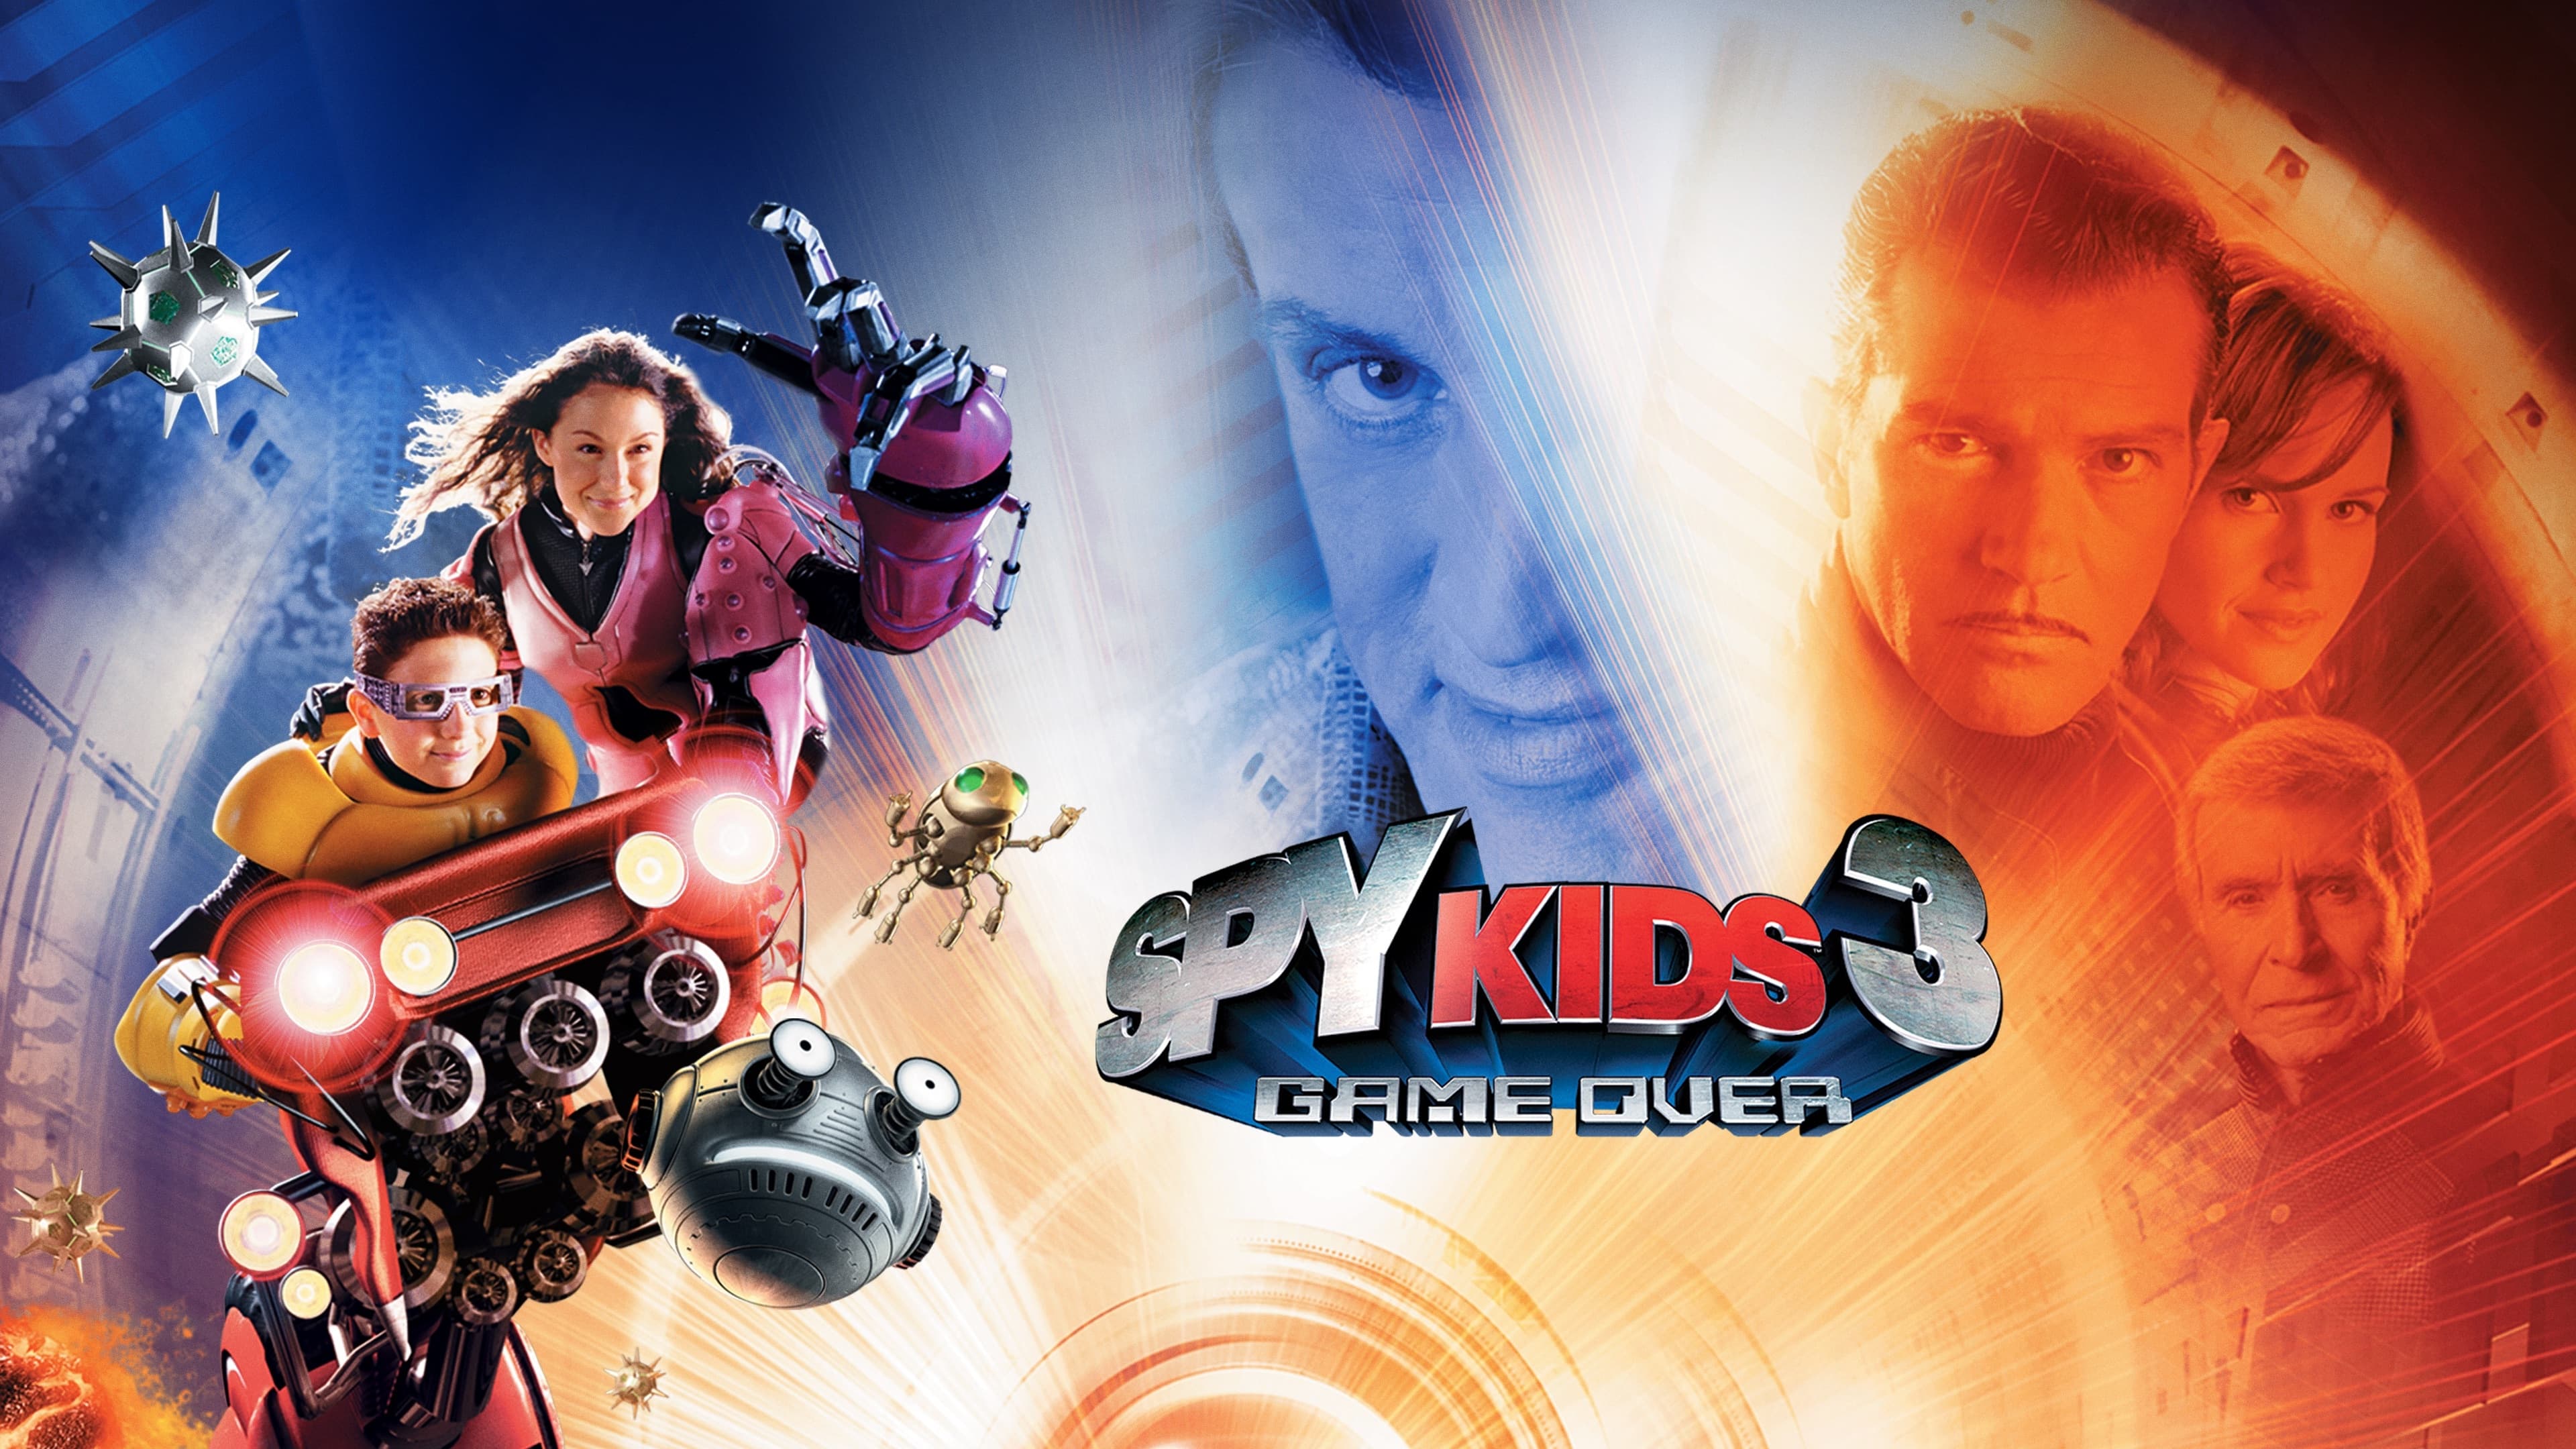 Spy Kids 3-D: Game Over (2003)